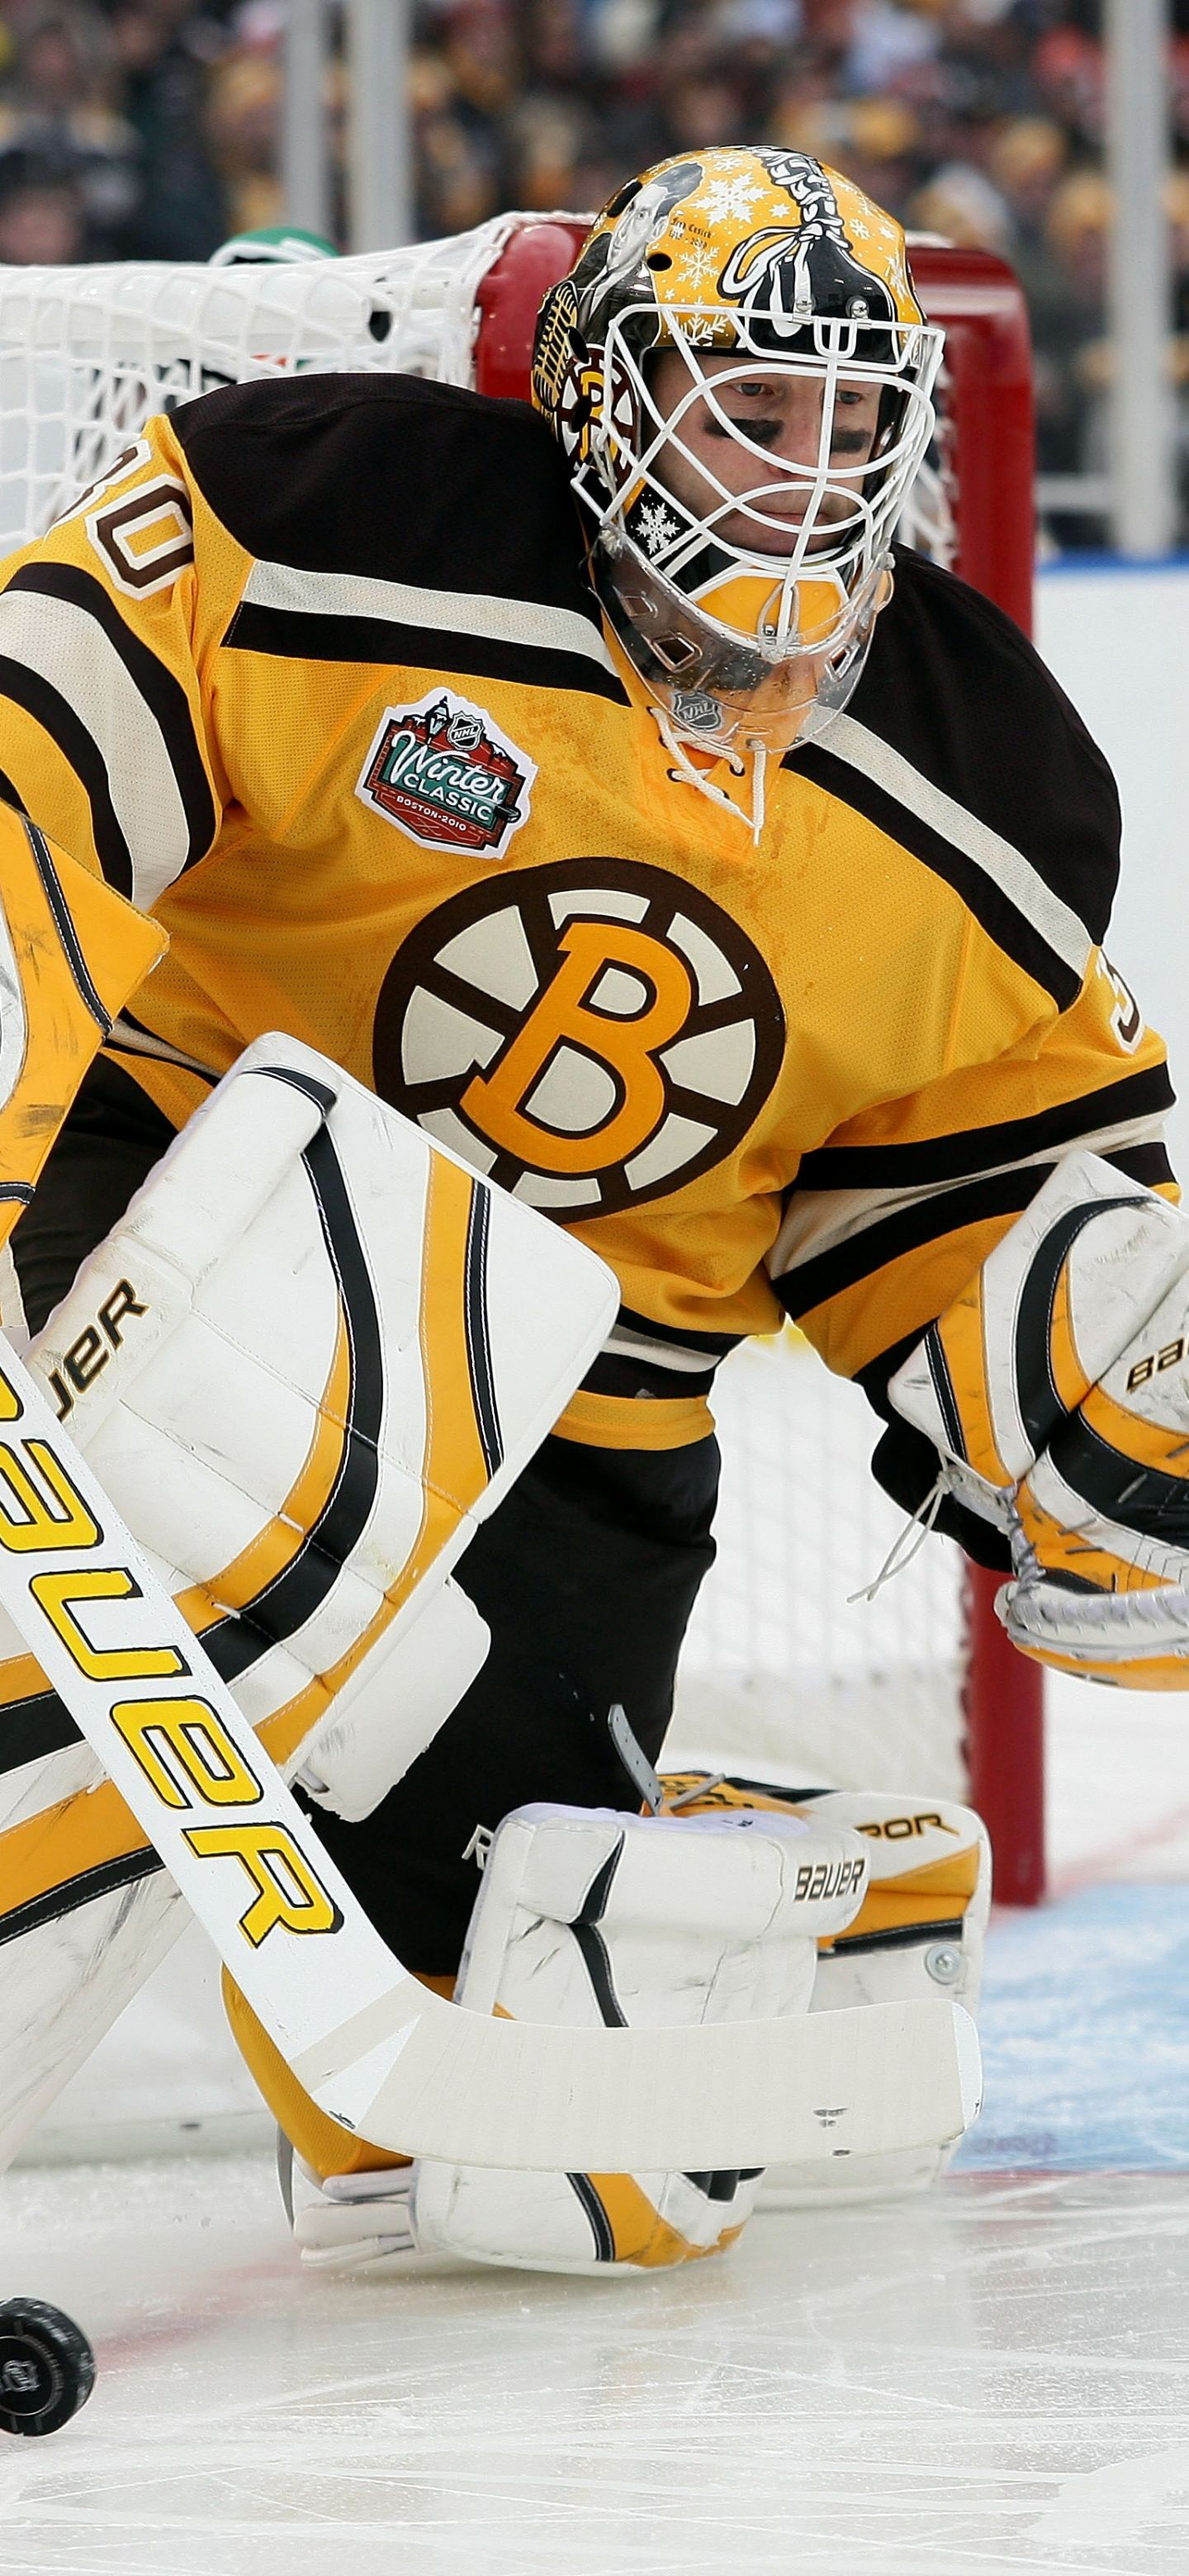 Download Logo Of The Boston Bruins Ice Hockey Team Wallpaper